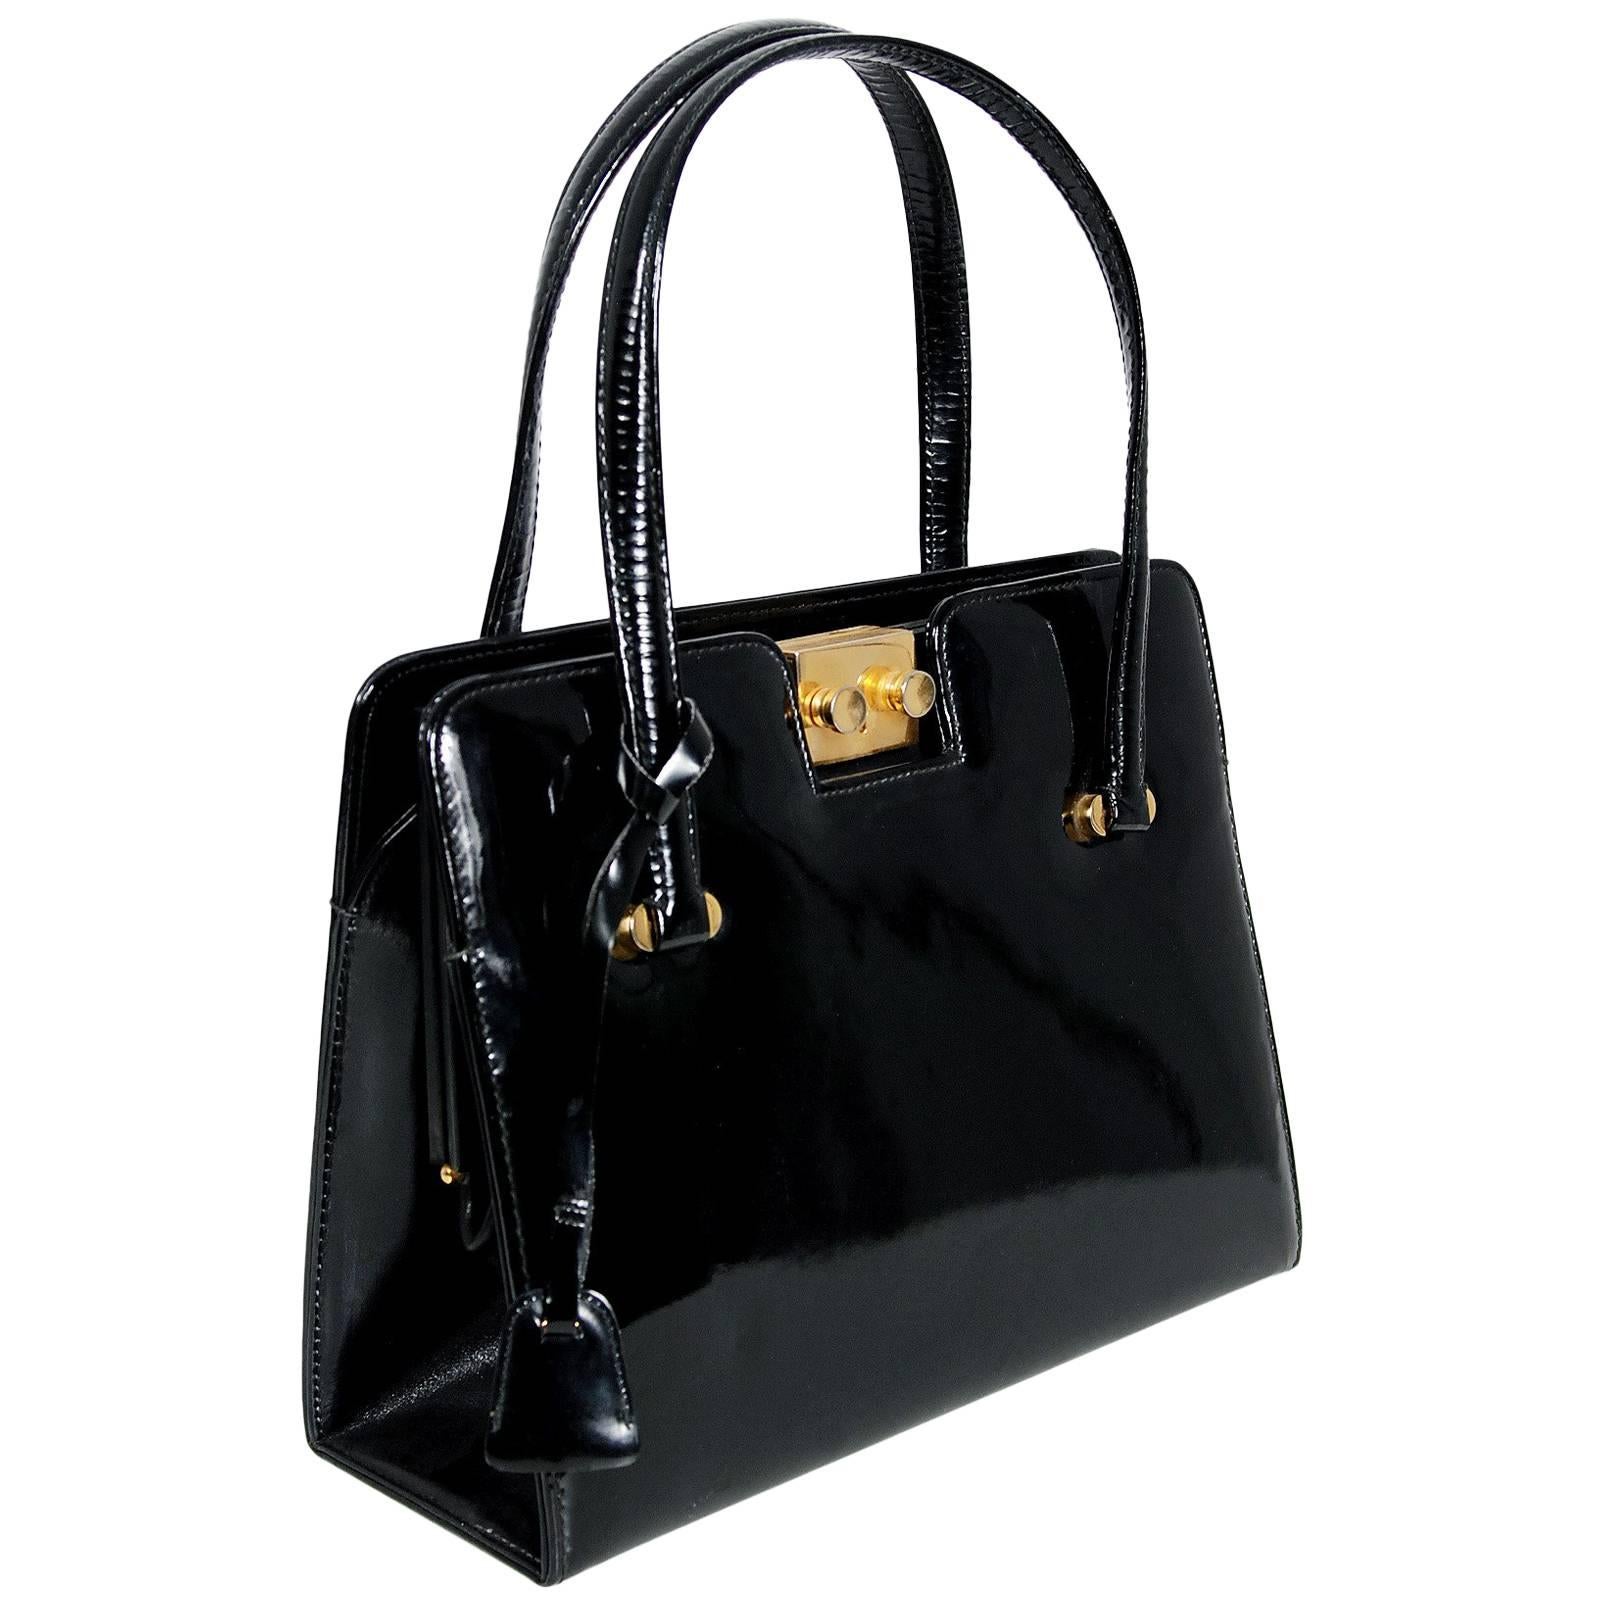 1960's Gucci Rare Black Patent Leather Lock and Key Structured Handbag Purse